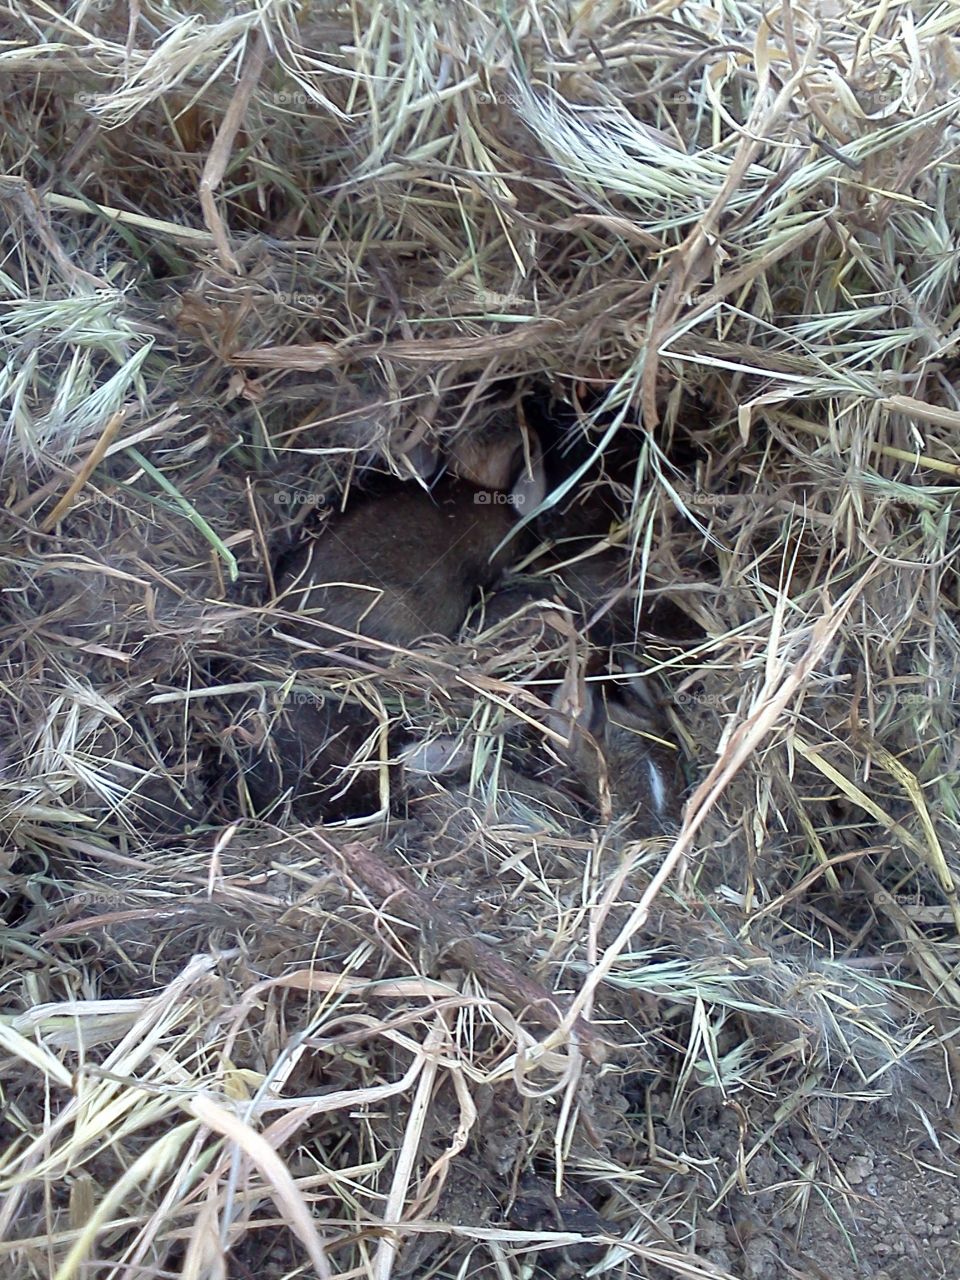 A nest of baby bunnies